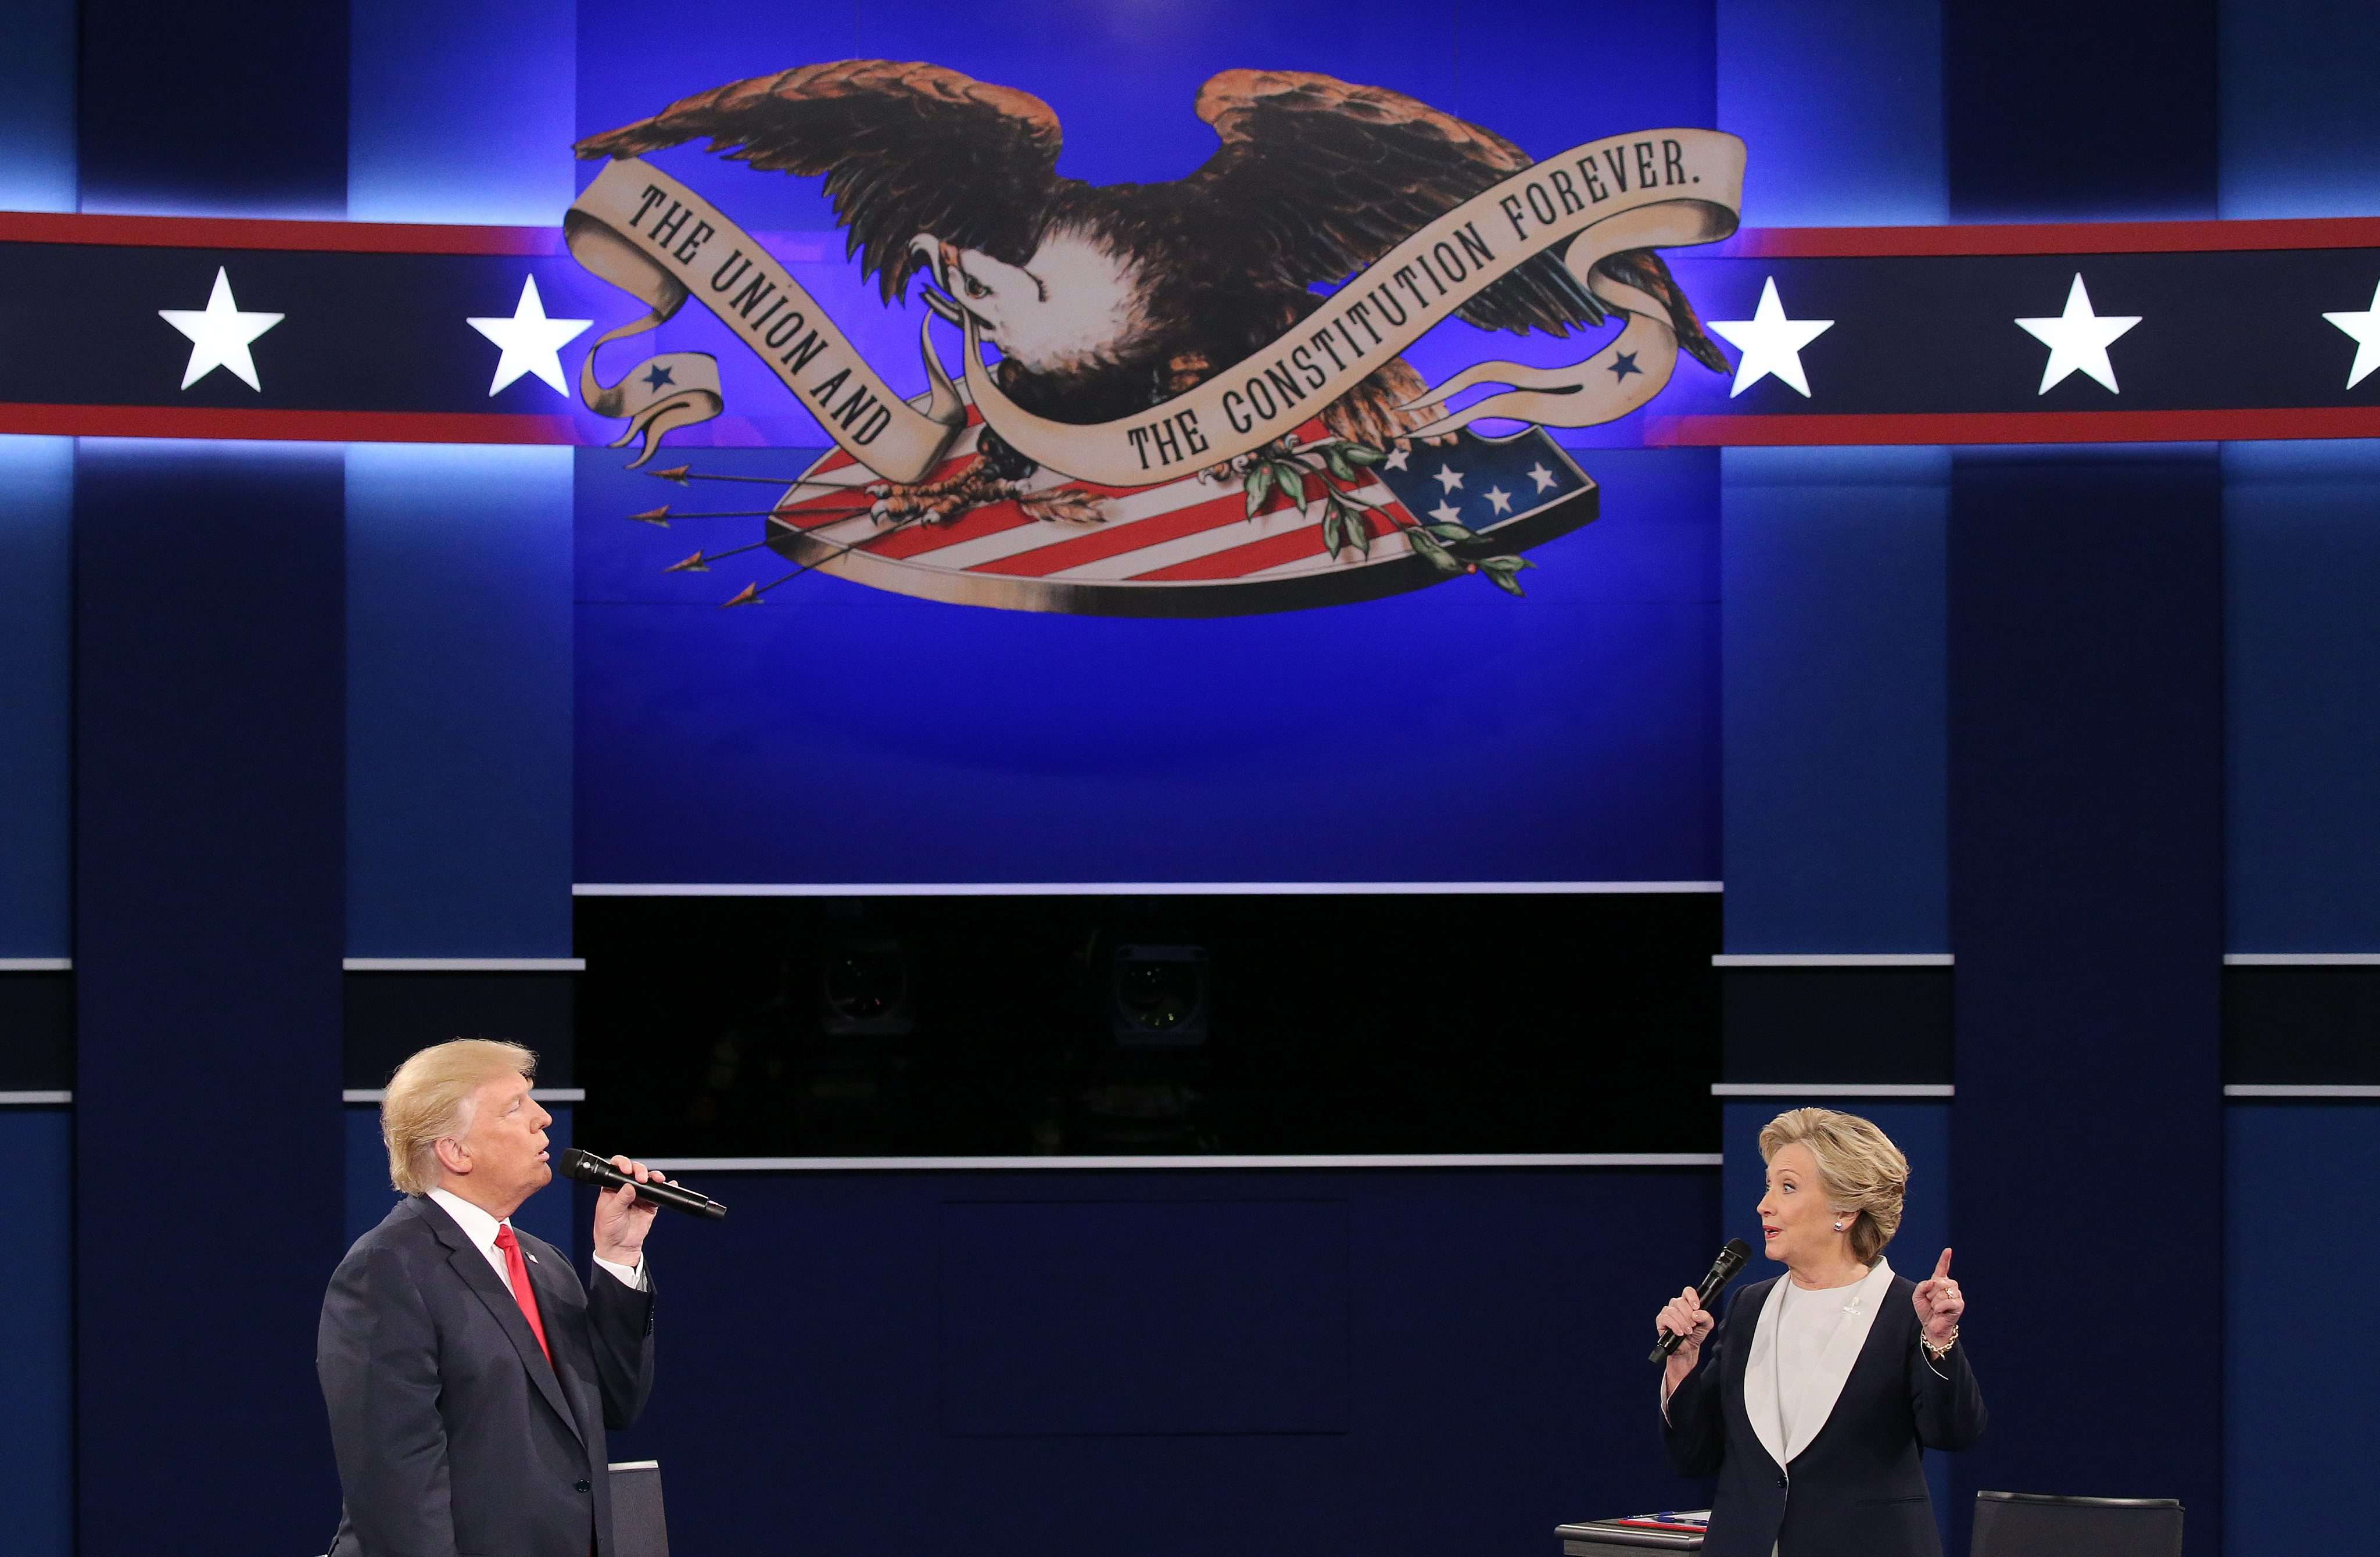 Republican Donald Trump and Democrat Hillary Clinton during the second presidential debate at Washington University in Missouri. Photo: EPA